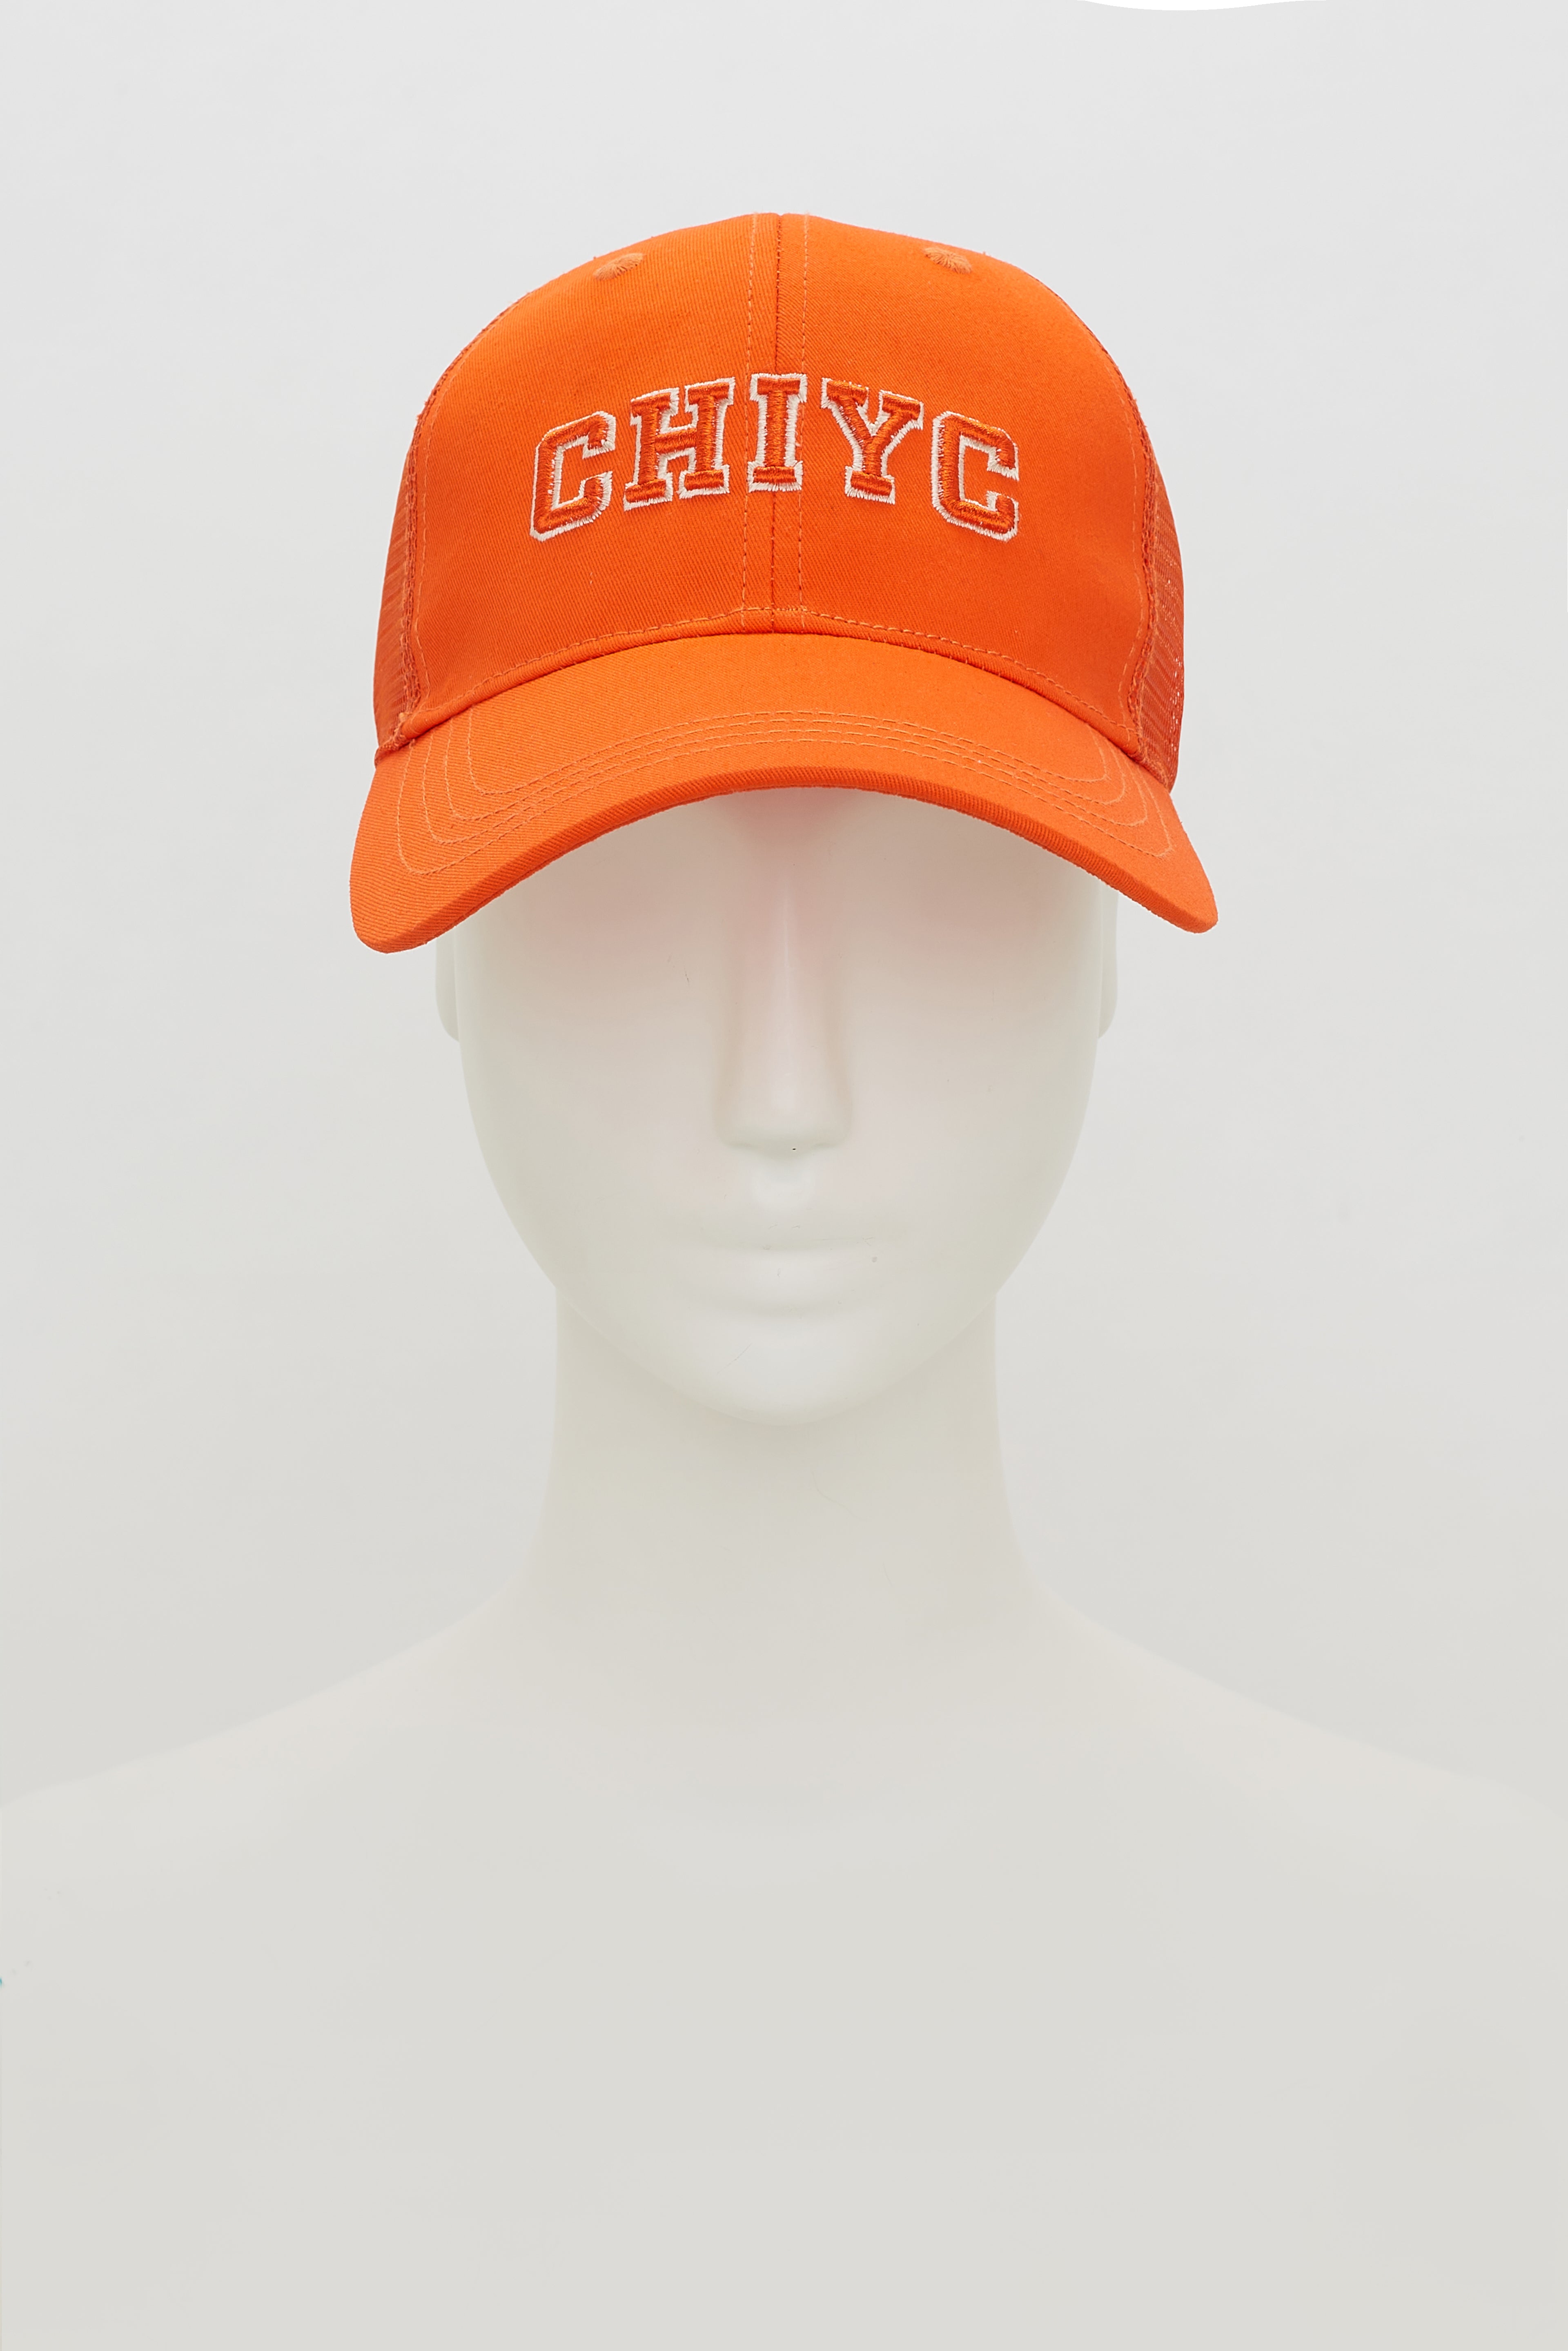 Dorothee-Schumacher-OUTLET-SALE-CHIYC-baseball-cap-Accessoires-OS-spiced-orange.jpg